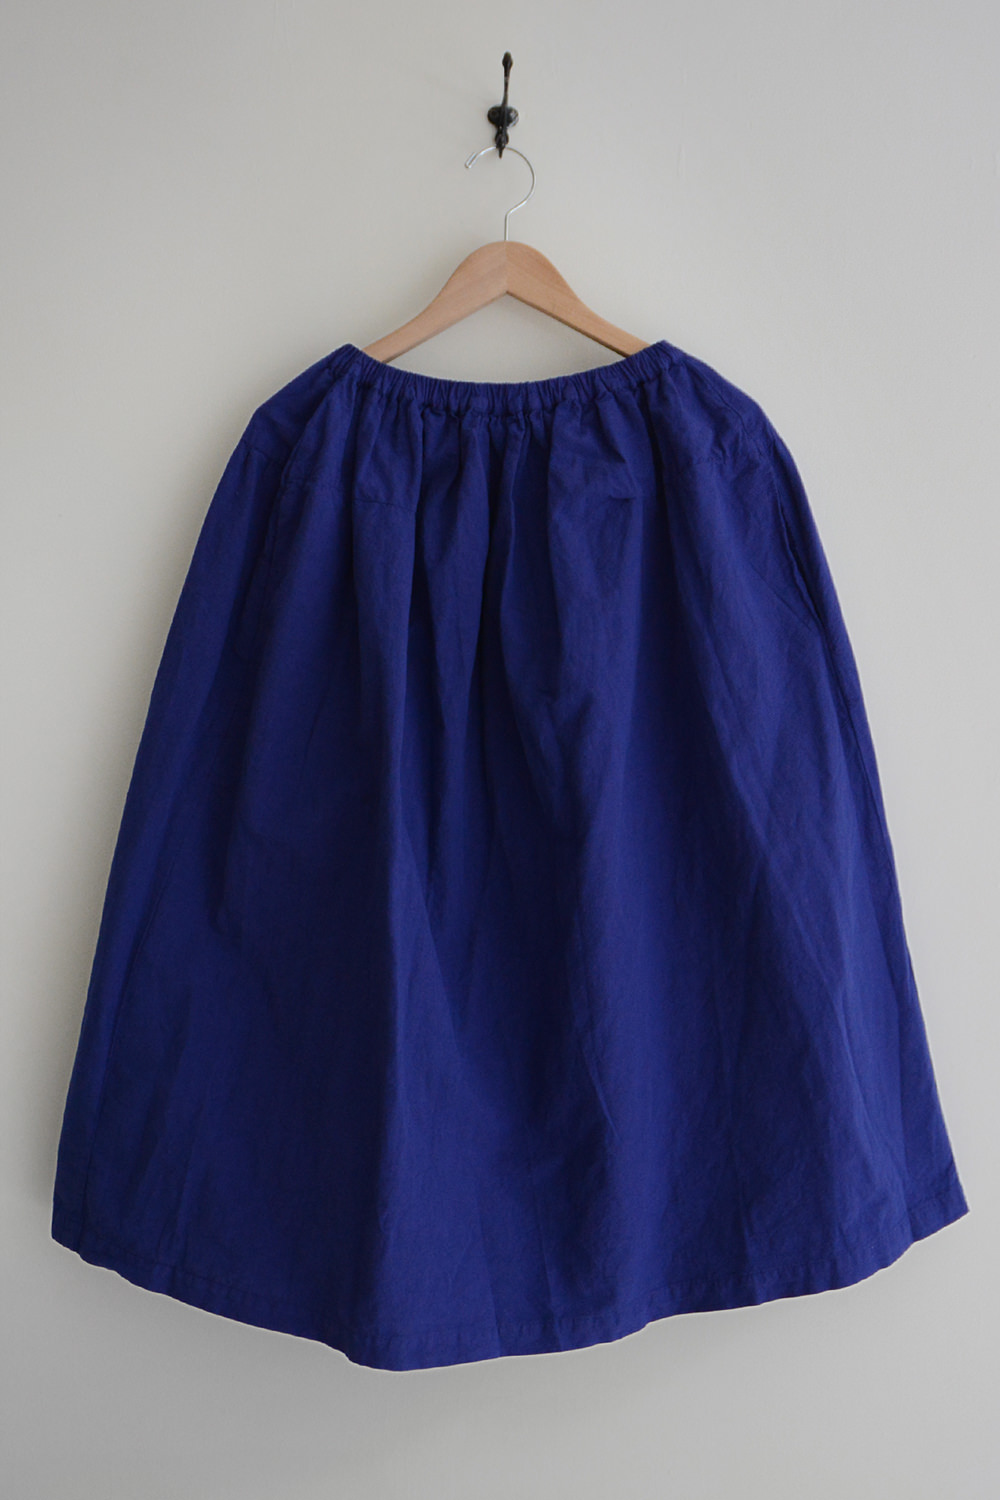 Manuelle Guibal, Linen Cotton Skirt in crazy blue Top Picture